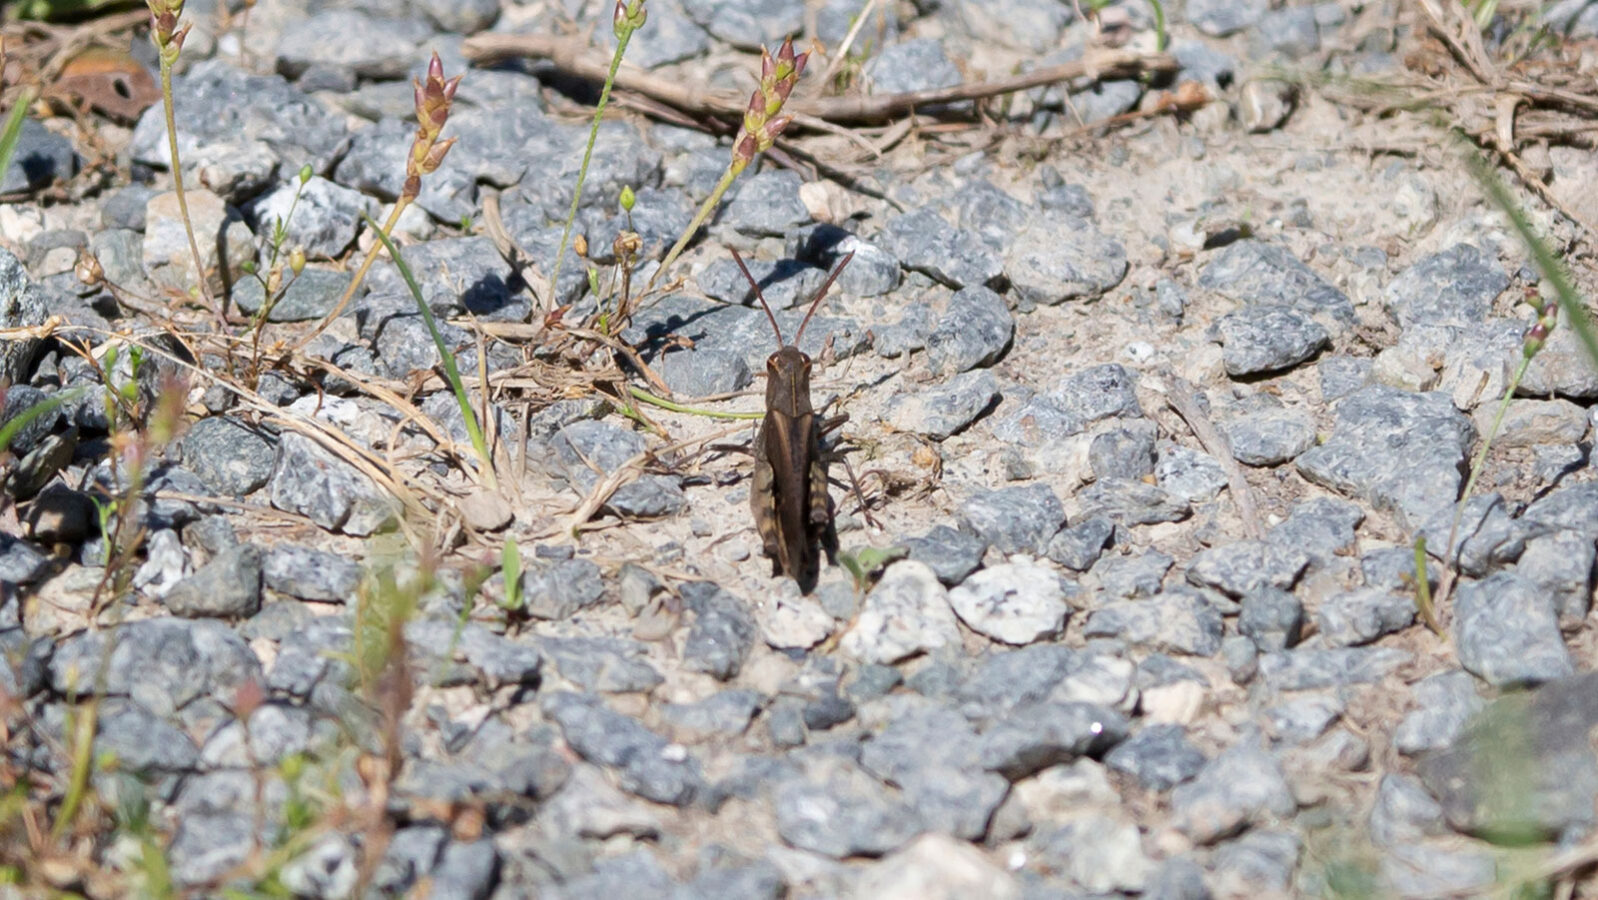 Sulphur-winged grasshopper on a gravel path